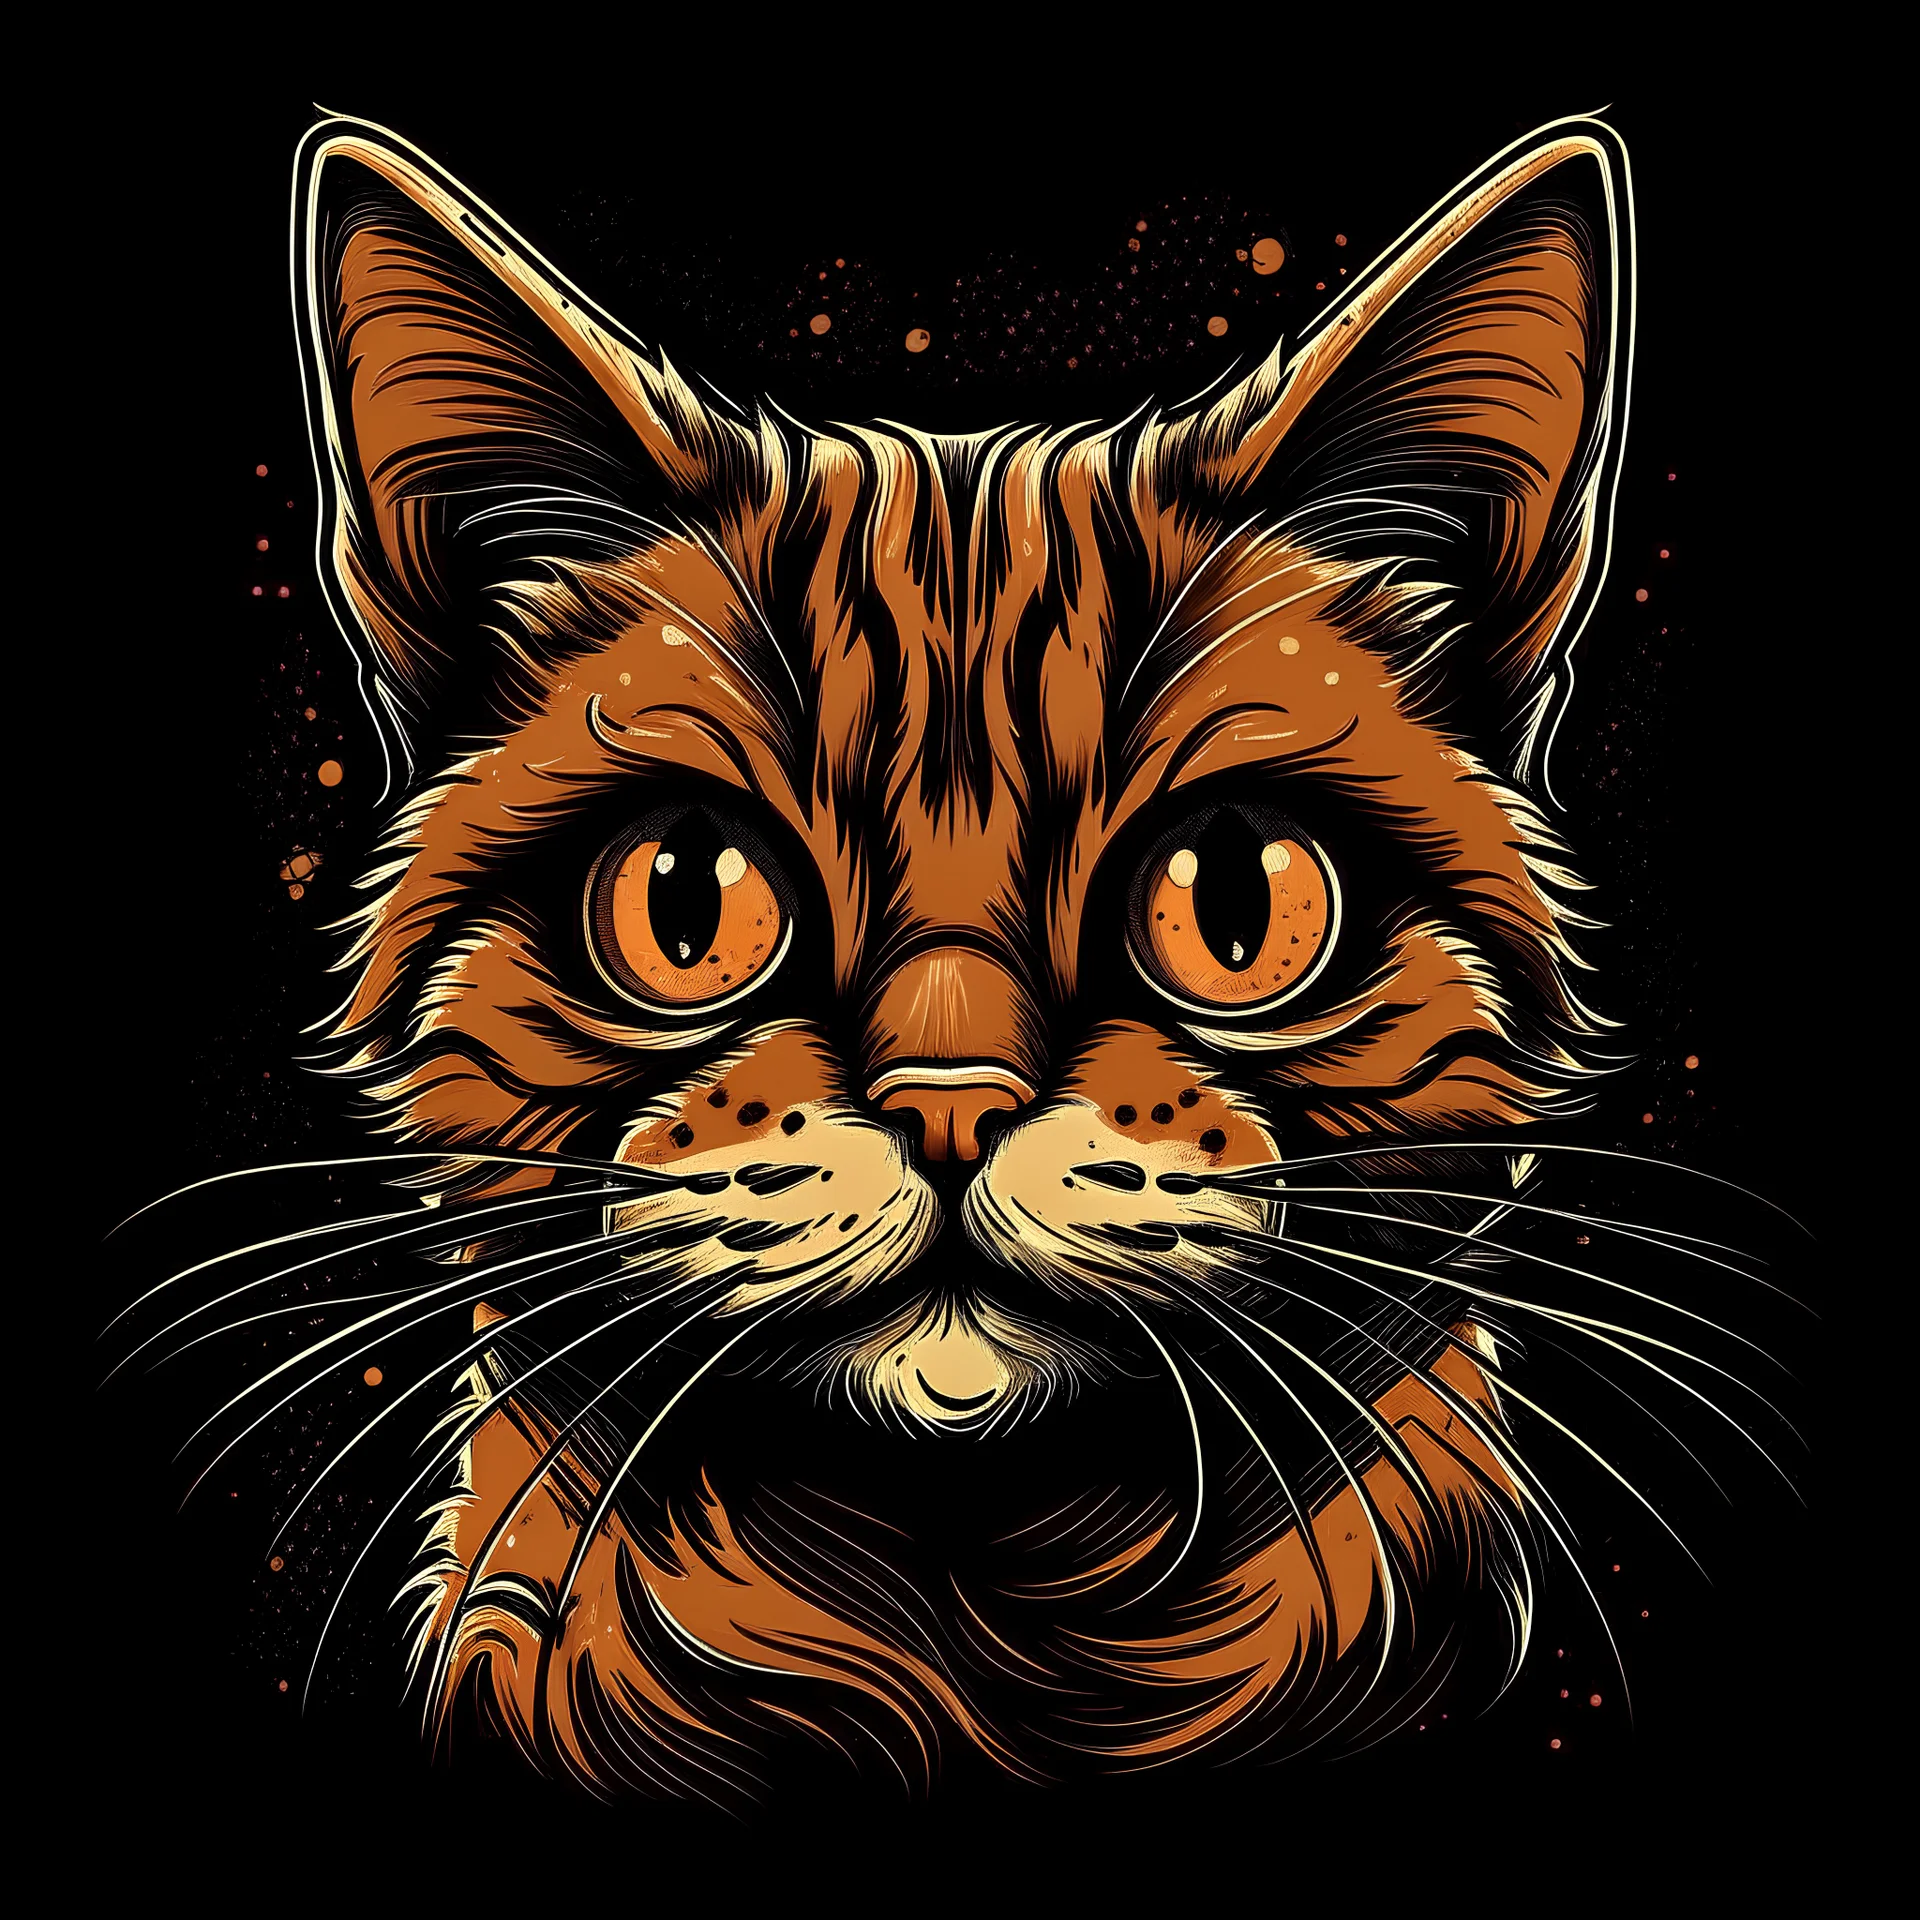 nosy cat artwork for t-shirt design